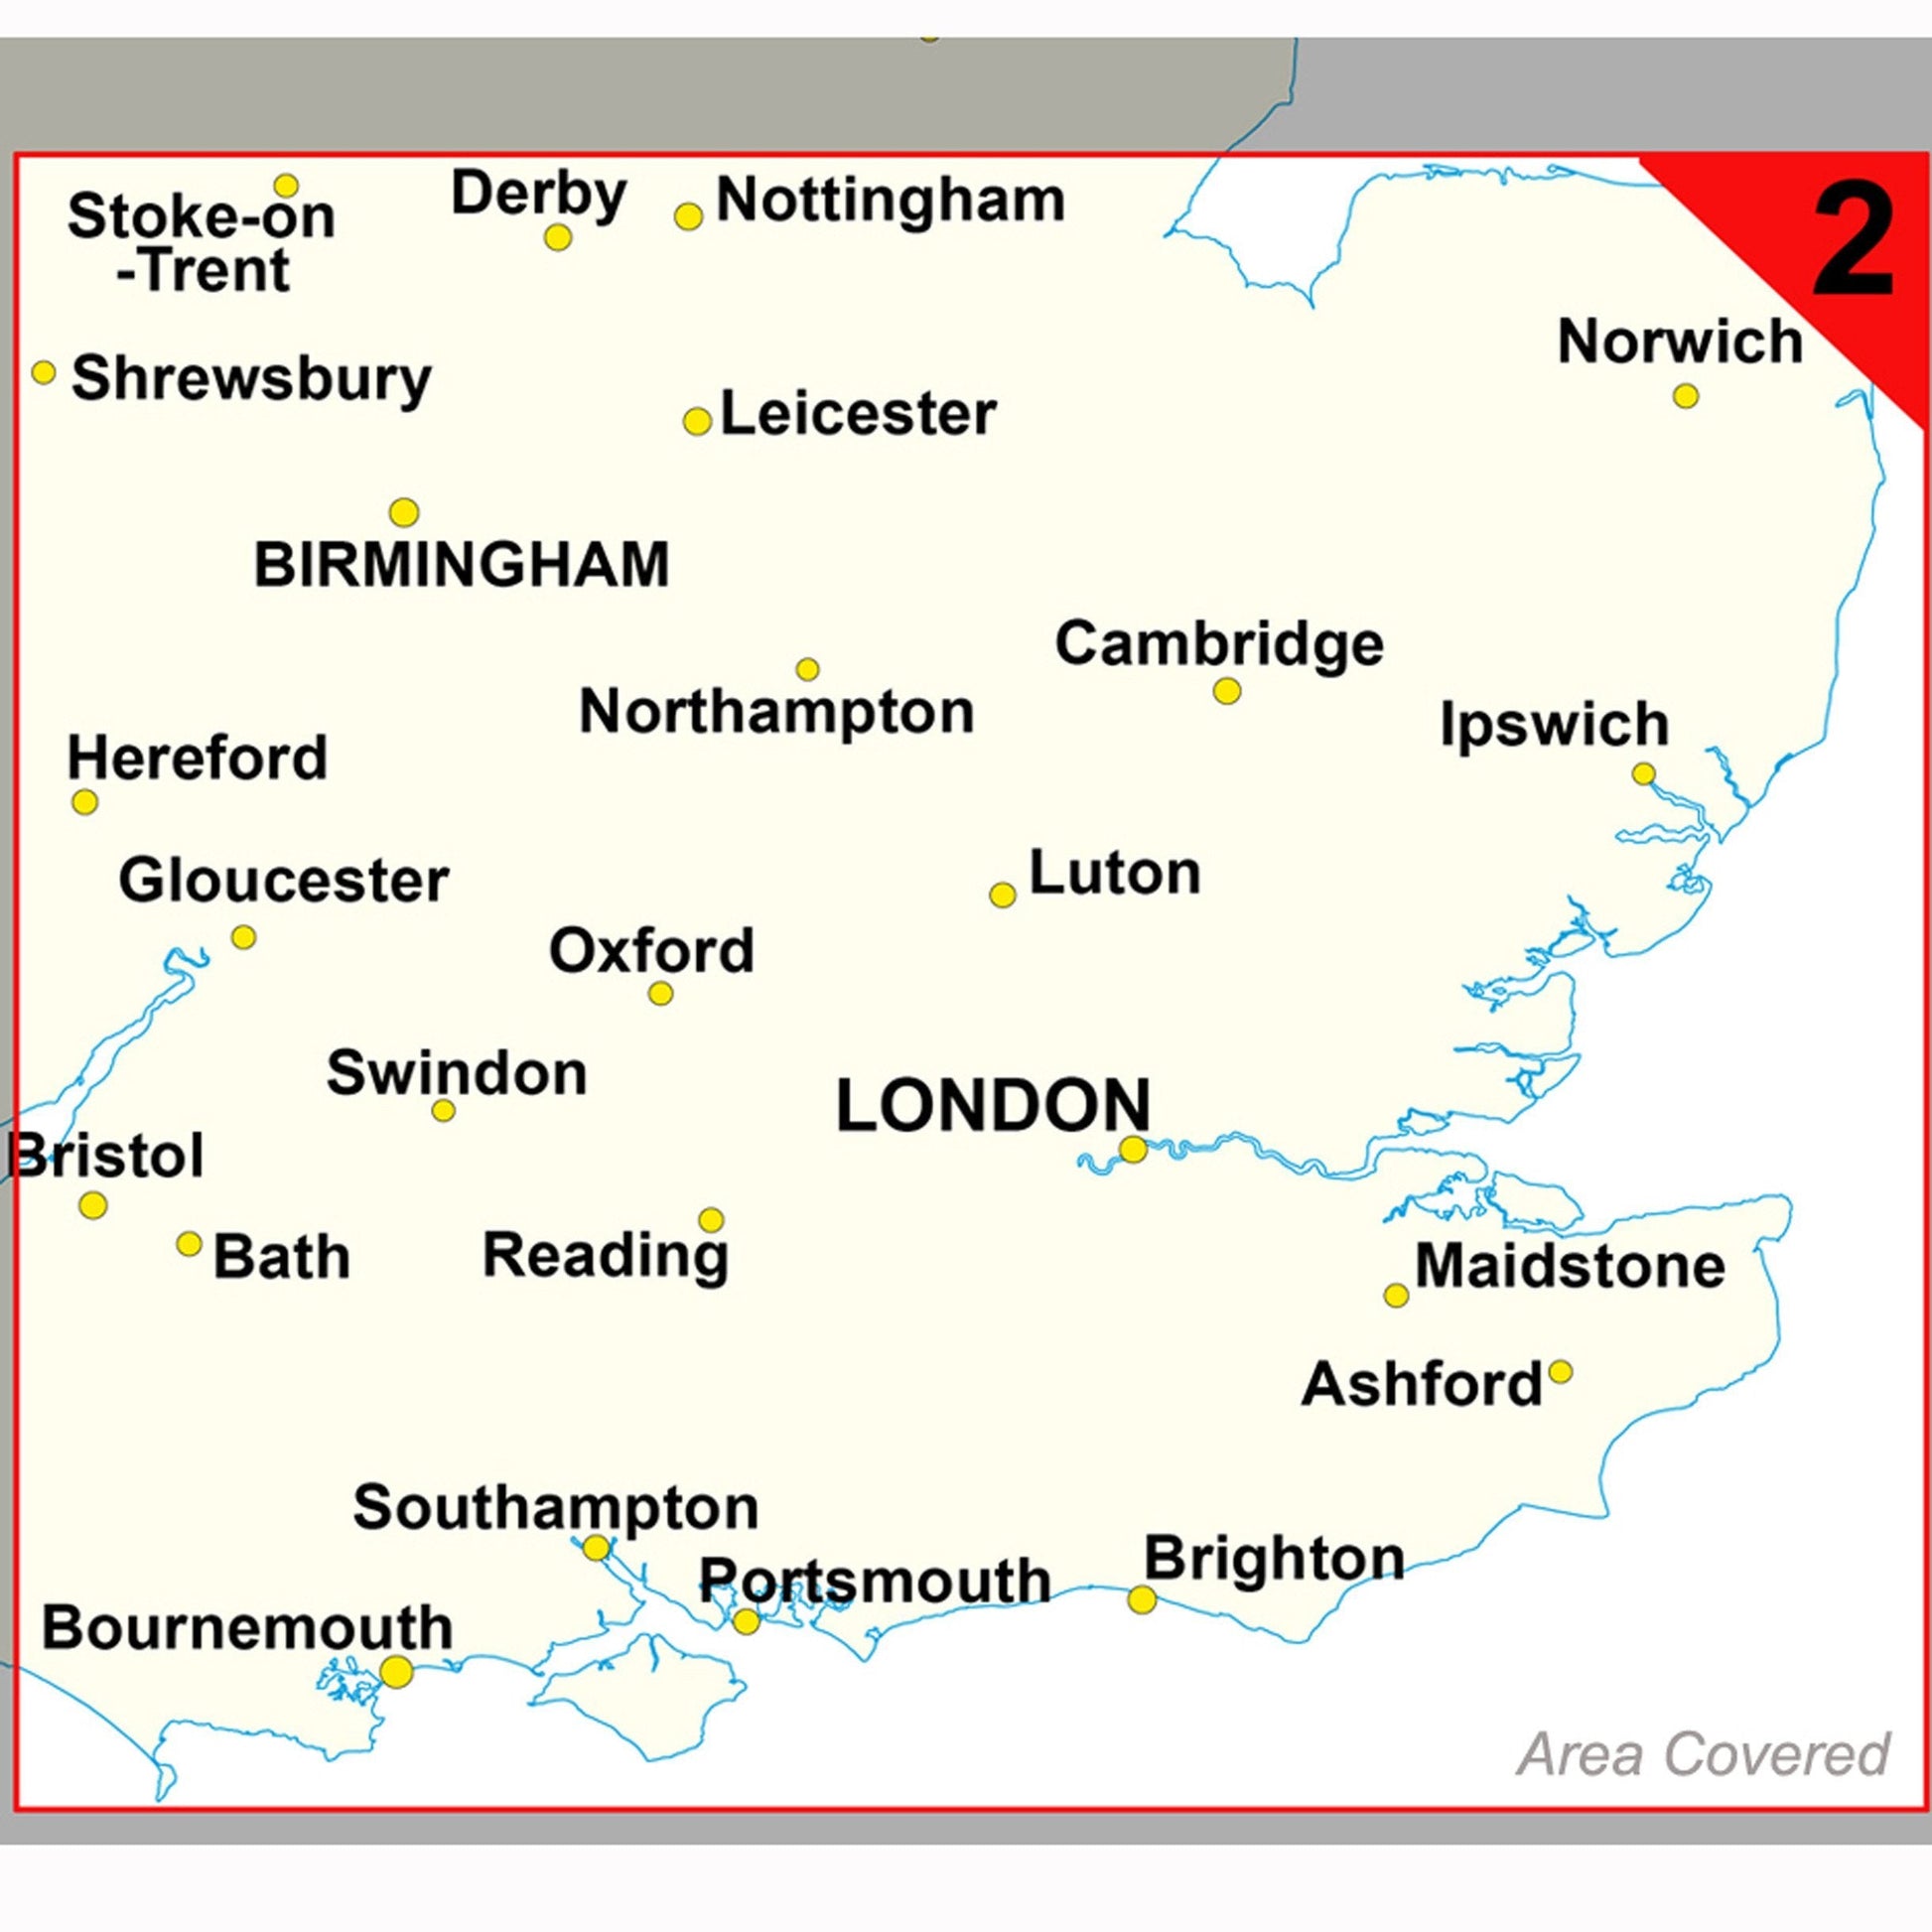 Wall Maps - Southeast England & Midlands (Birmingham, Bristol, London) Postcode Wall Map - District Map 2